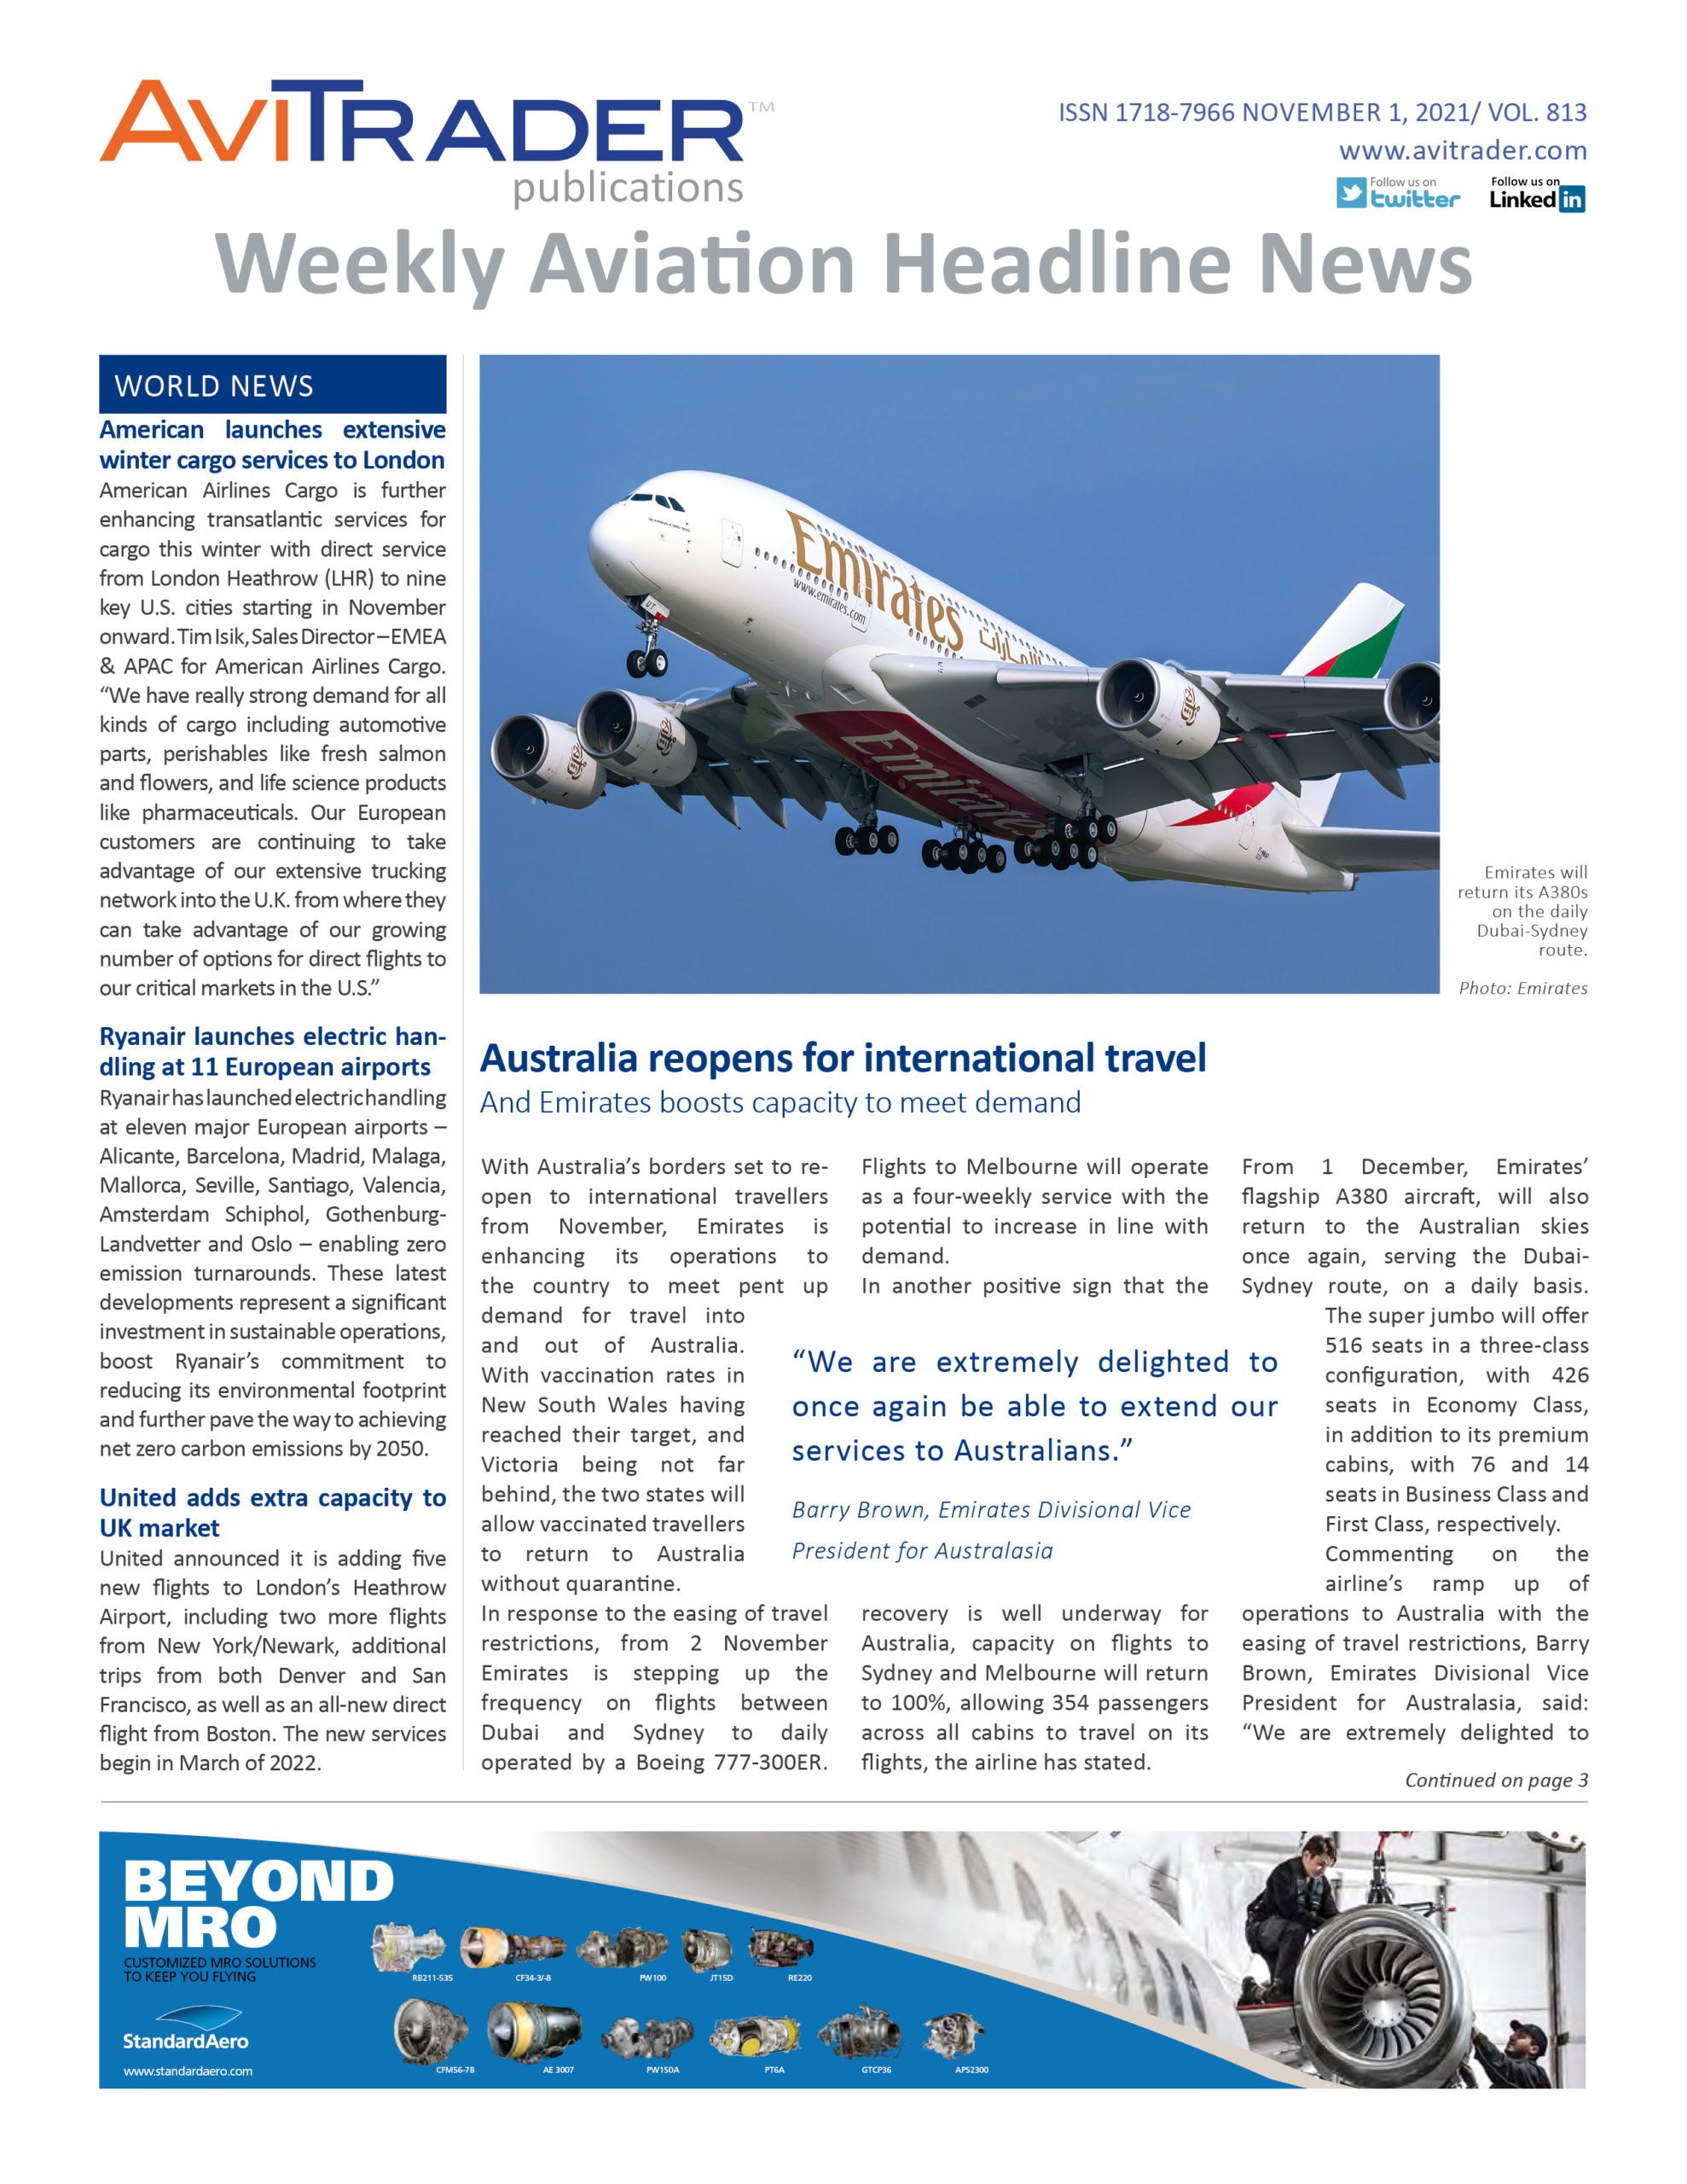 AviTrader_Weekly_Headline_News_Cover_2021-11-01